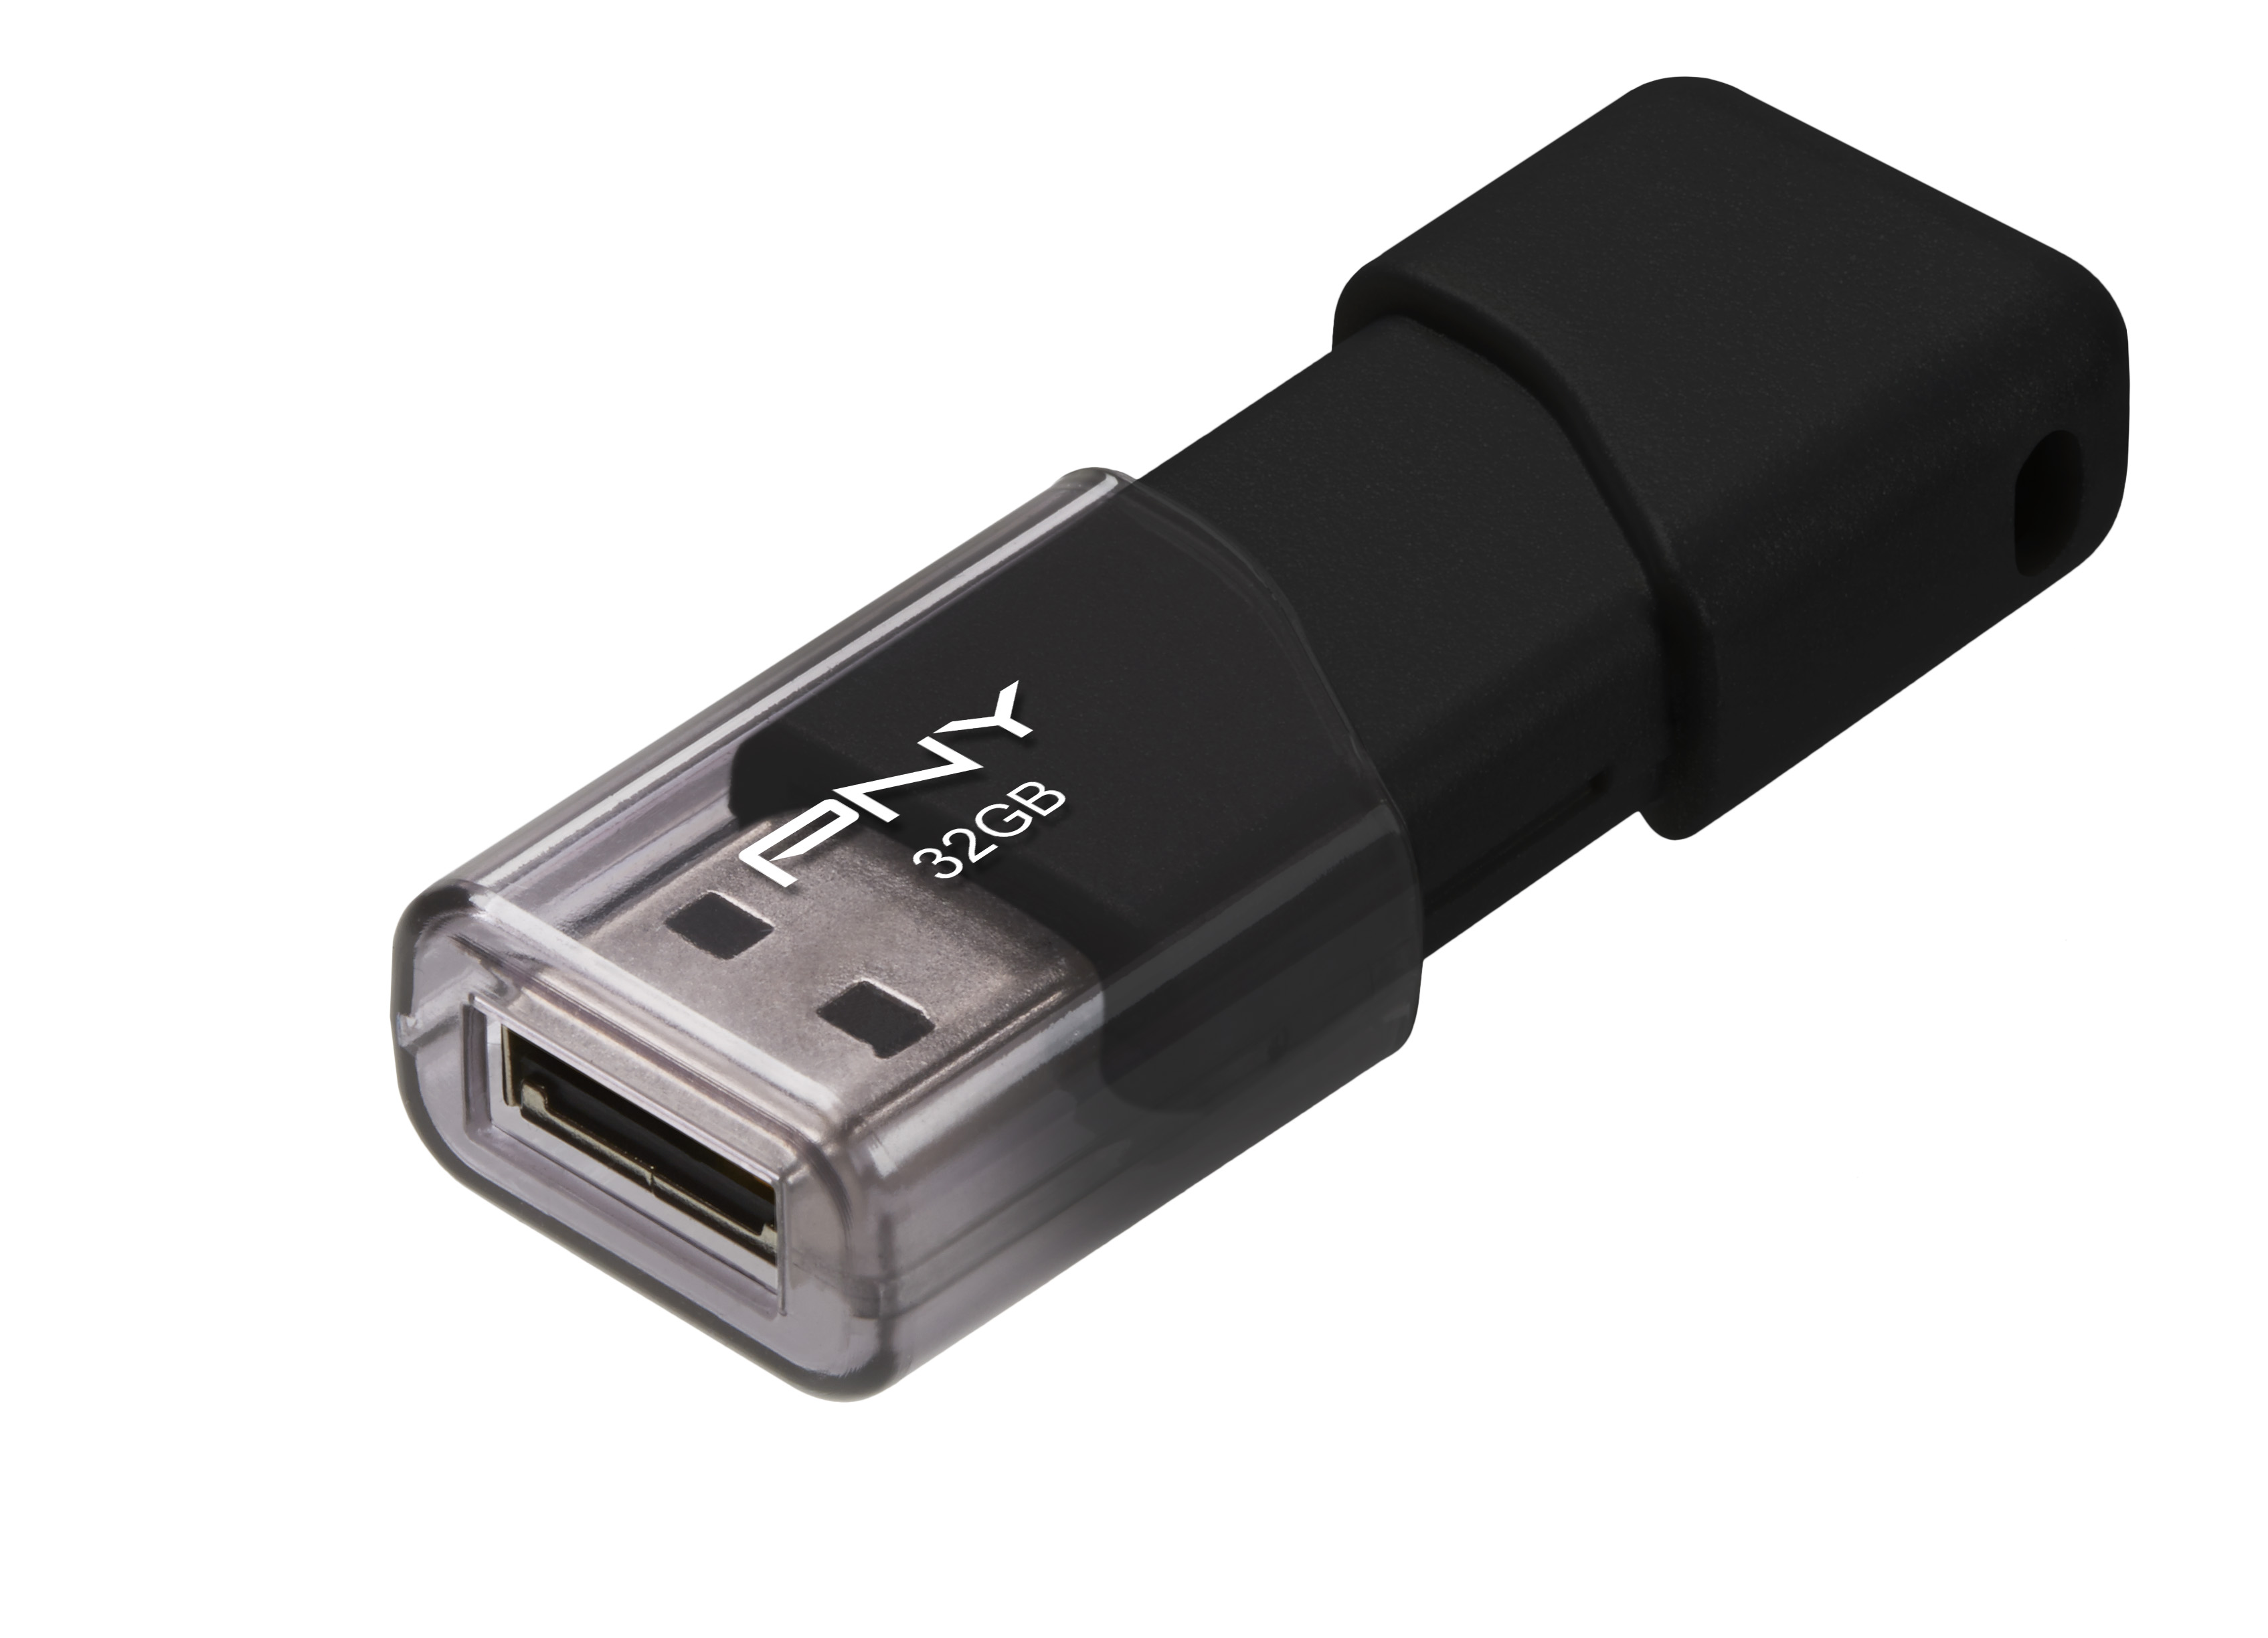 PNY 32GB Attache USB 2.0 Flash Drive - P-FD32GATT03-GE - image 3 of 6